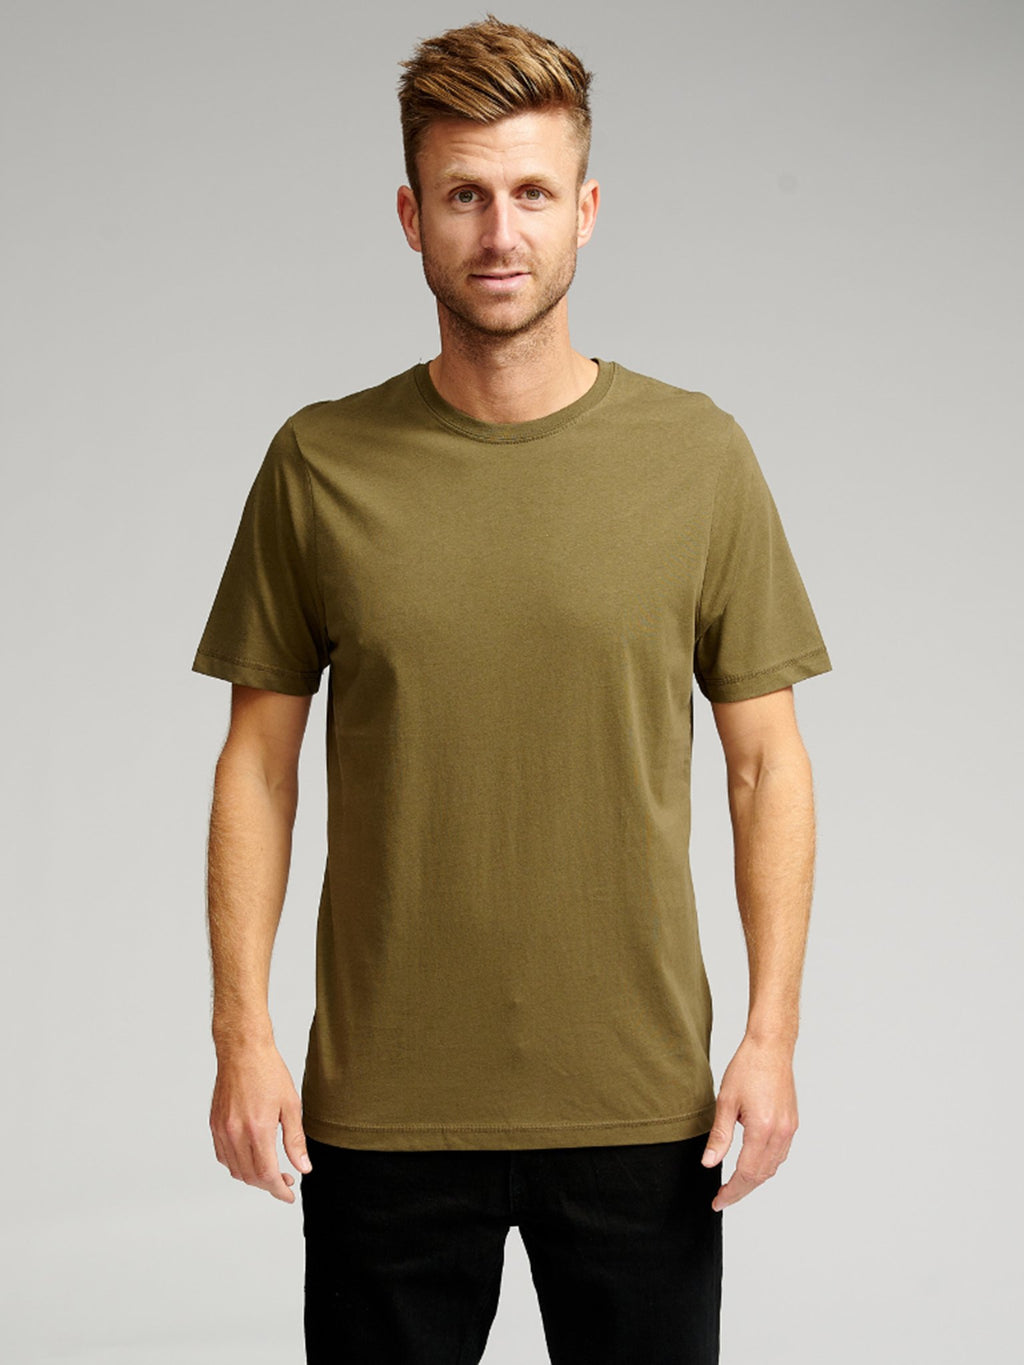 Organic Basic T-Shirts – Package Deal 9 pcs. (V.I.P)